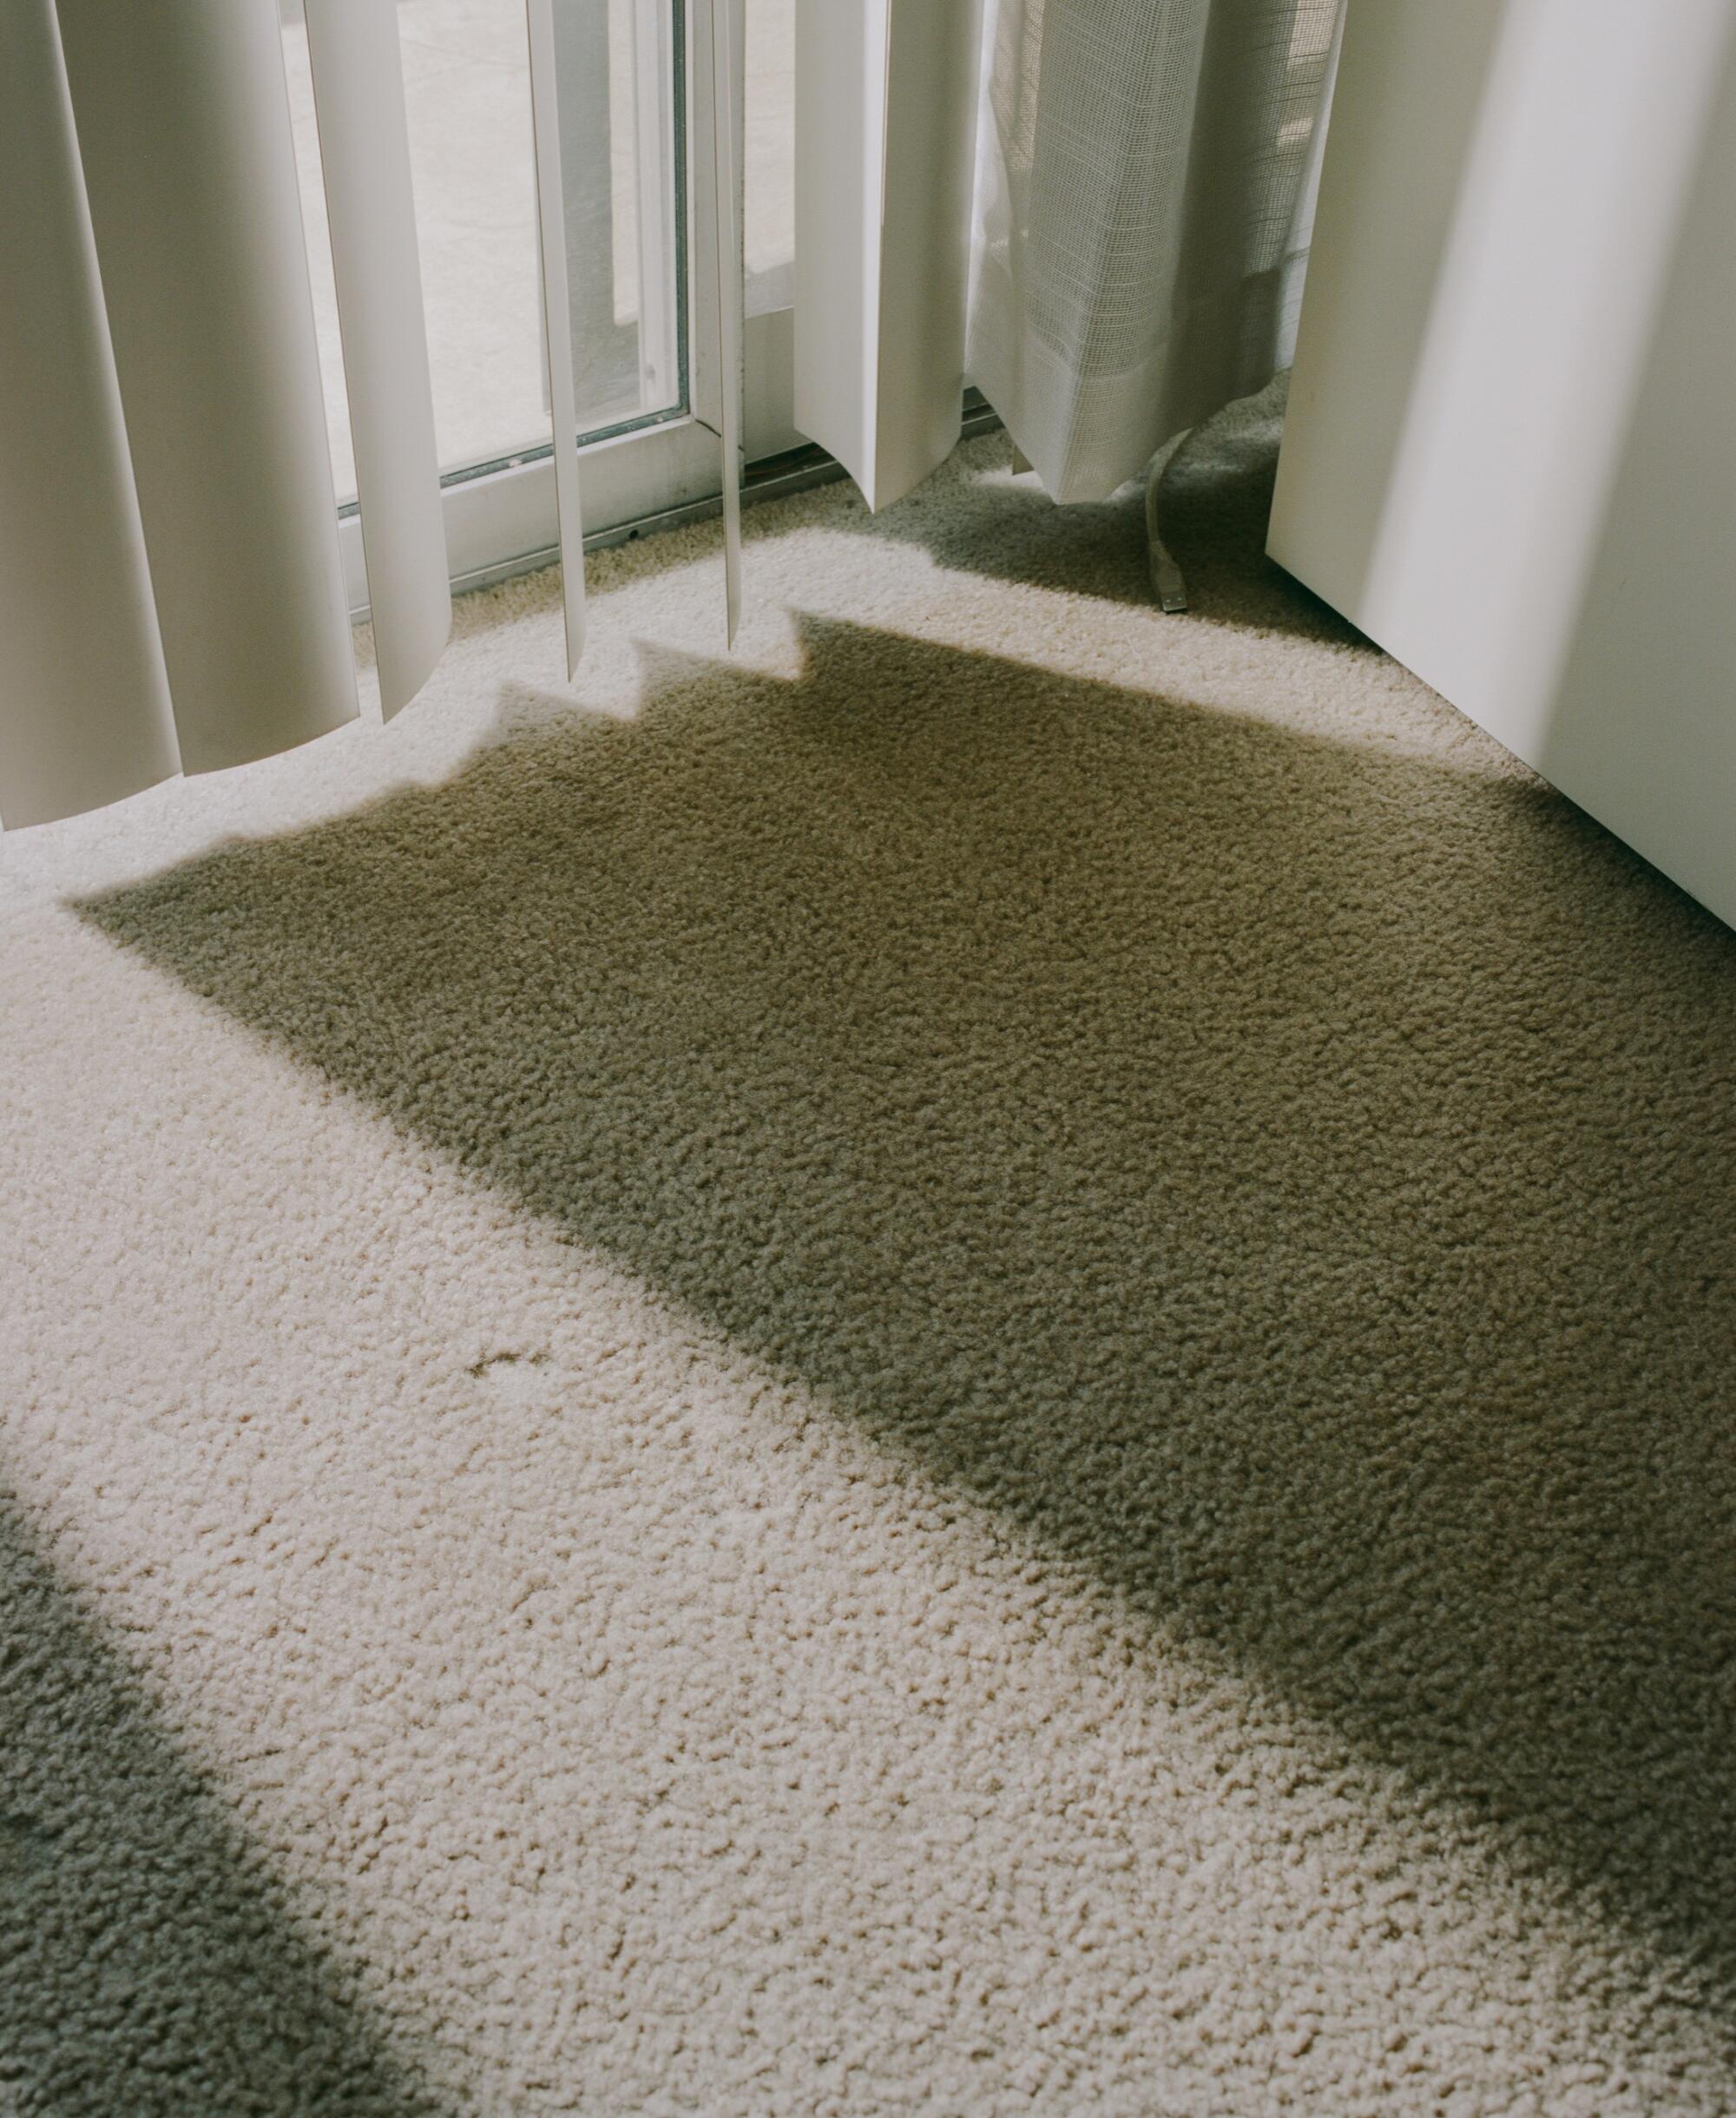 Photo essay on carpets for Image magazine, issue 11 - Renovation